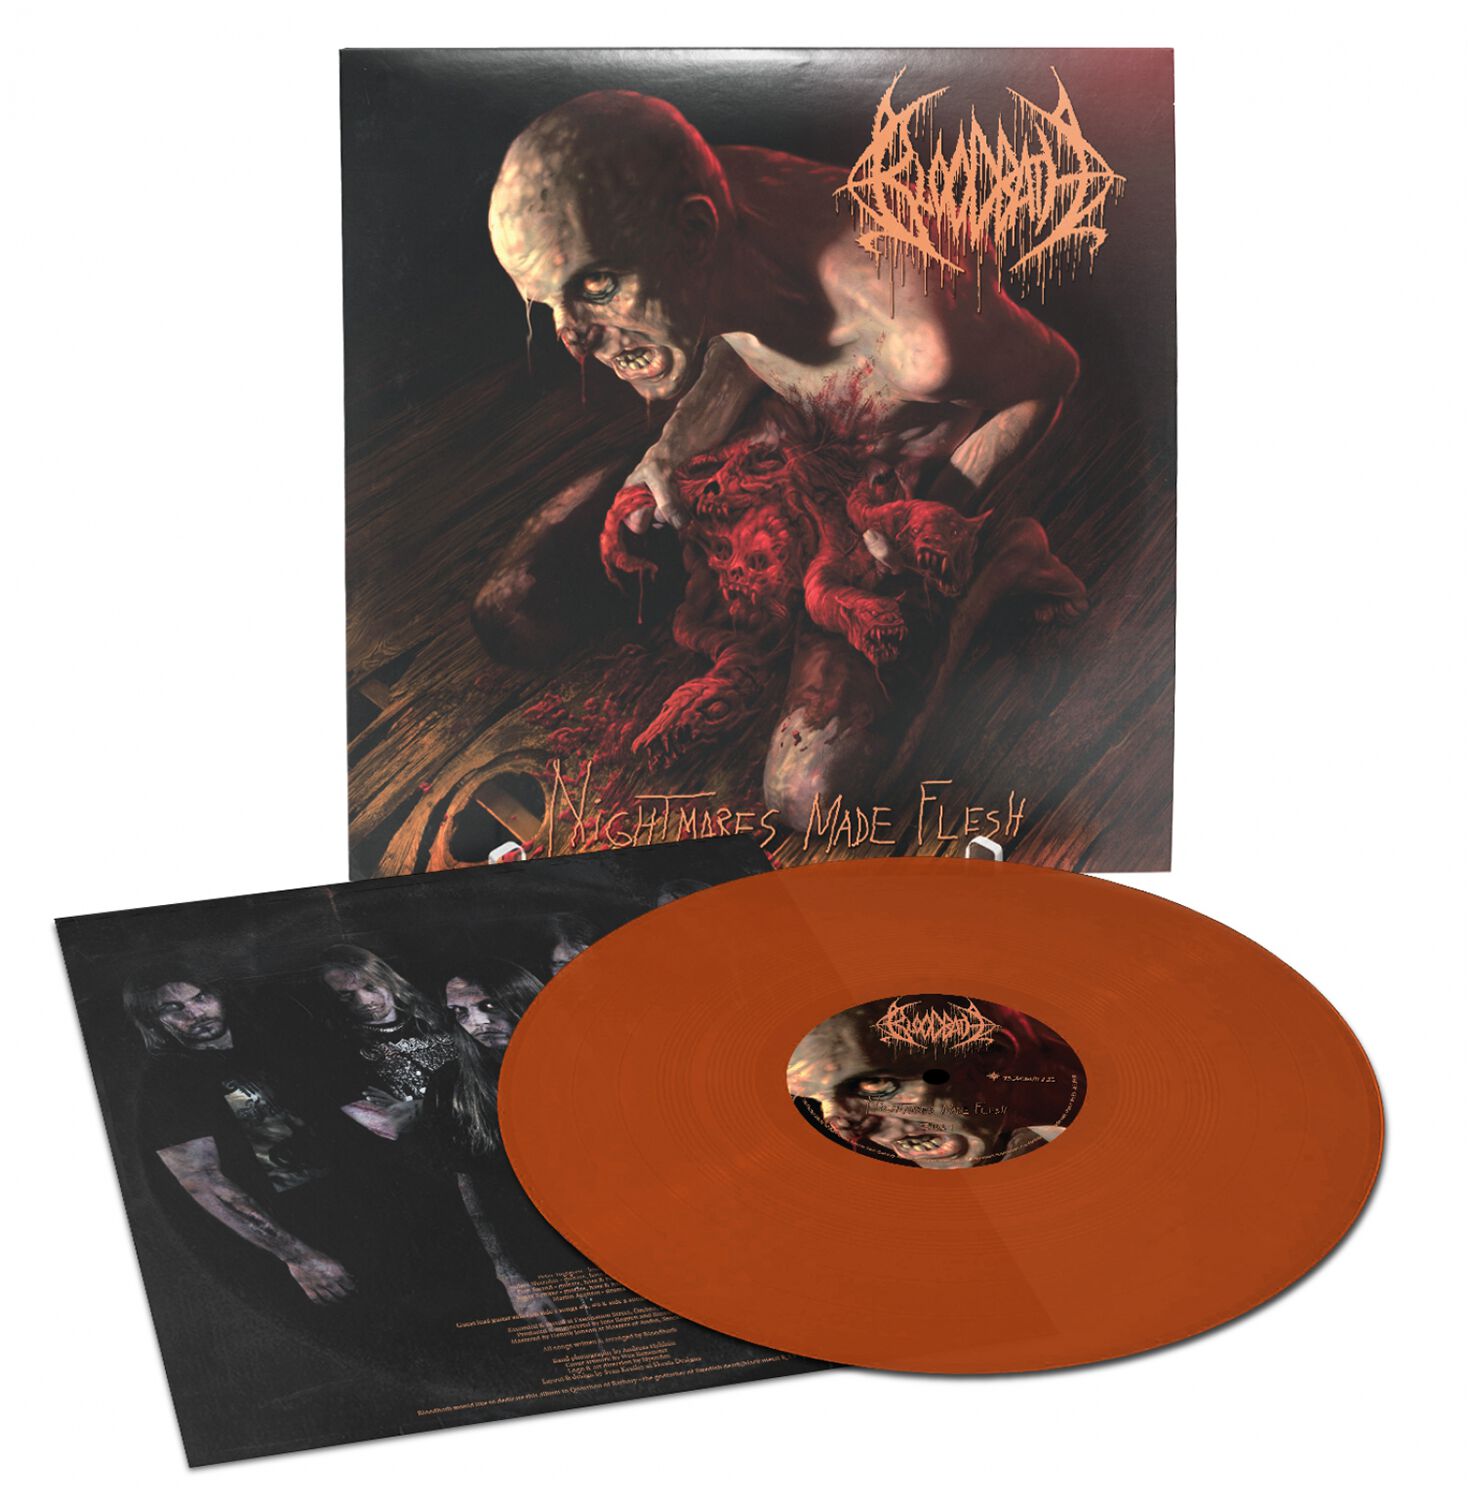 Bloodbath Nightmares made flesh LP orange